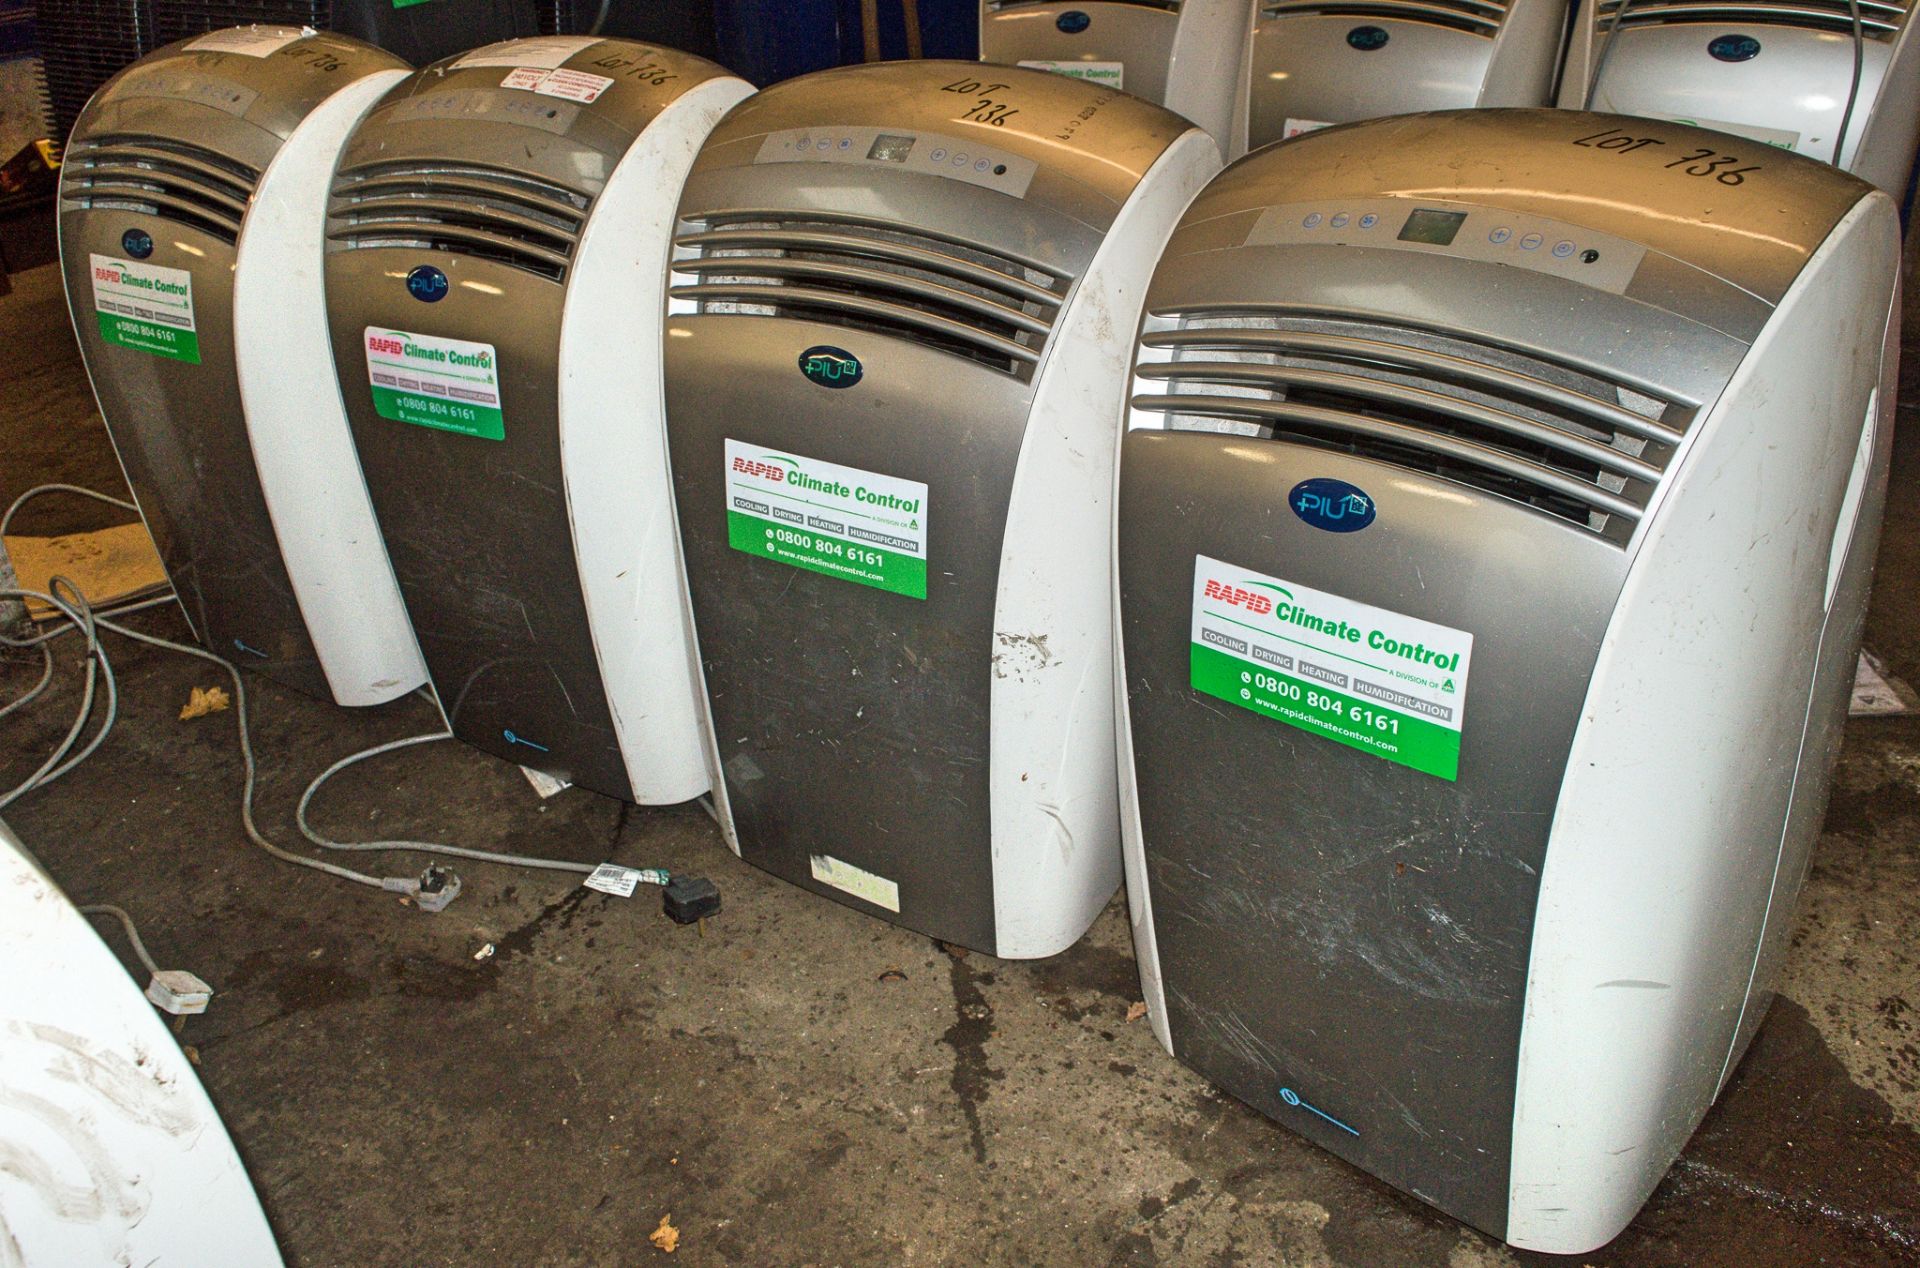 4 - 240v air conditioning units